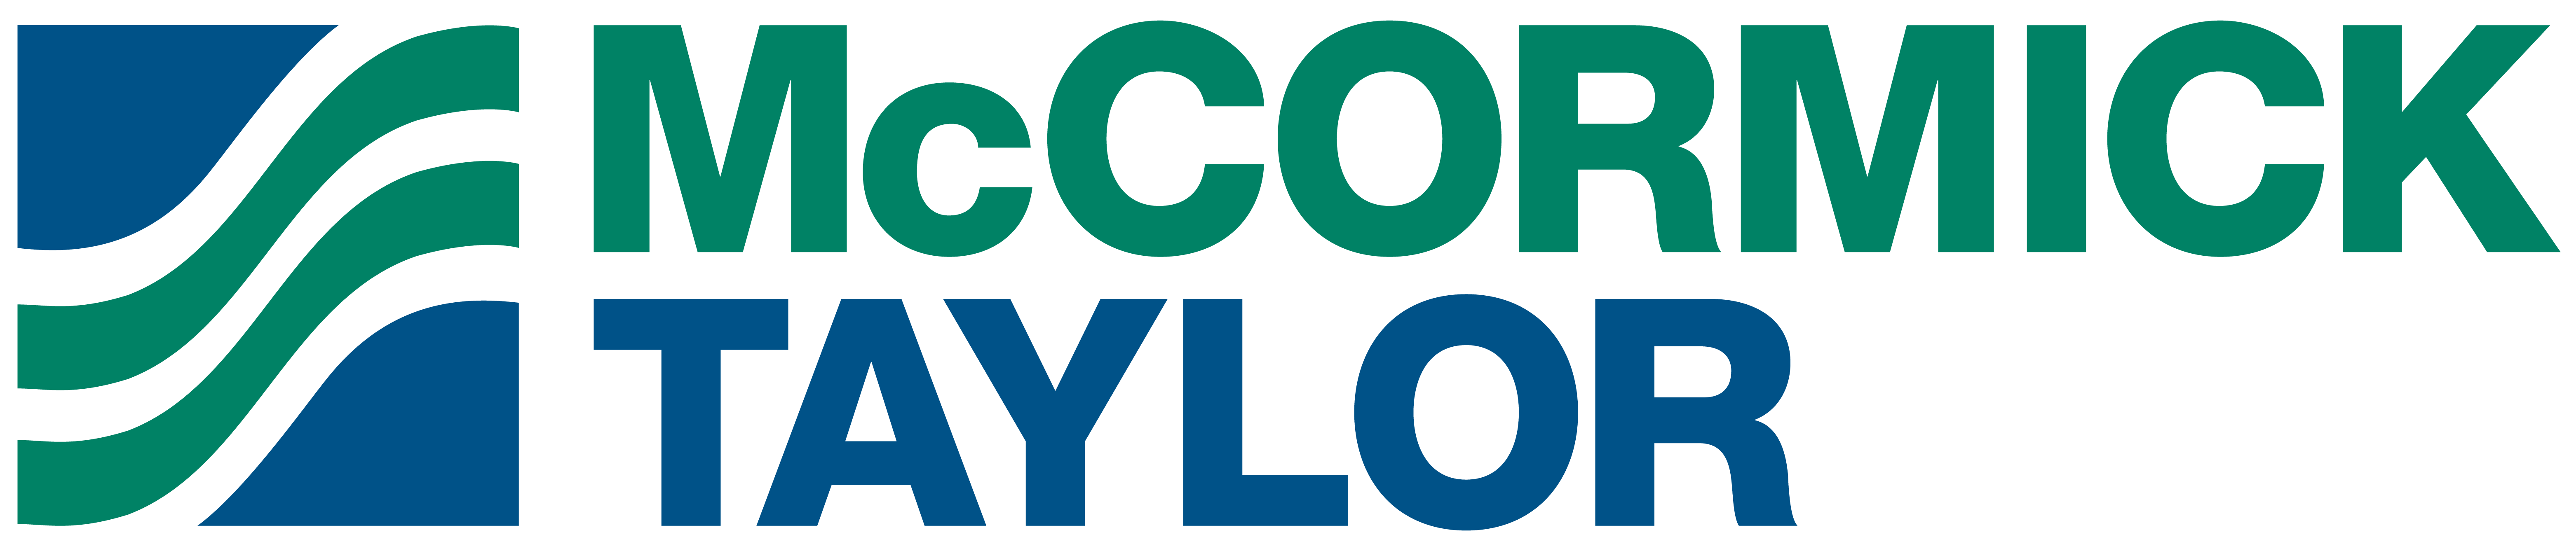 McCormick Taylor logo